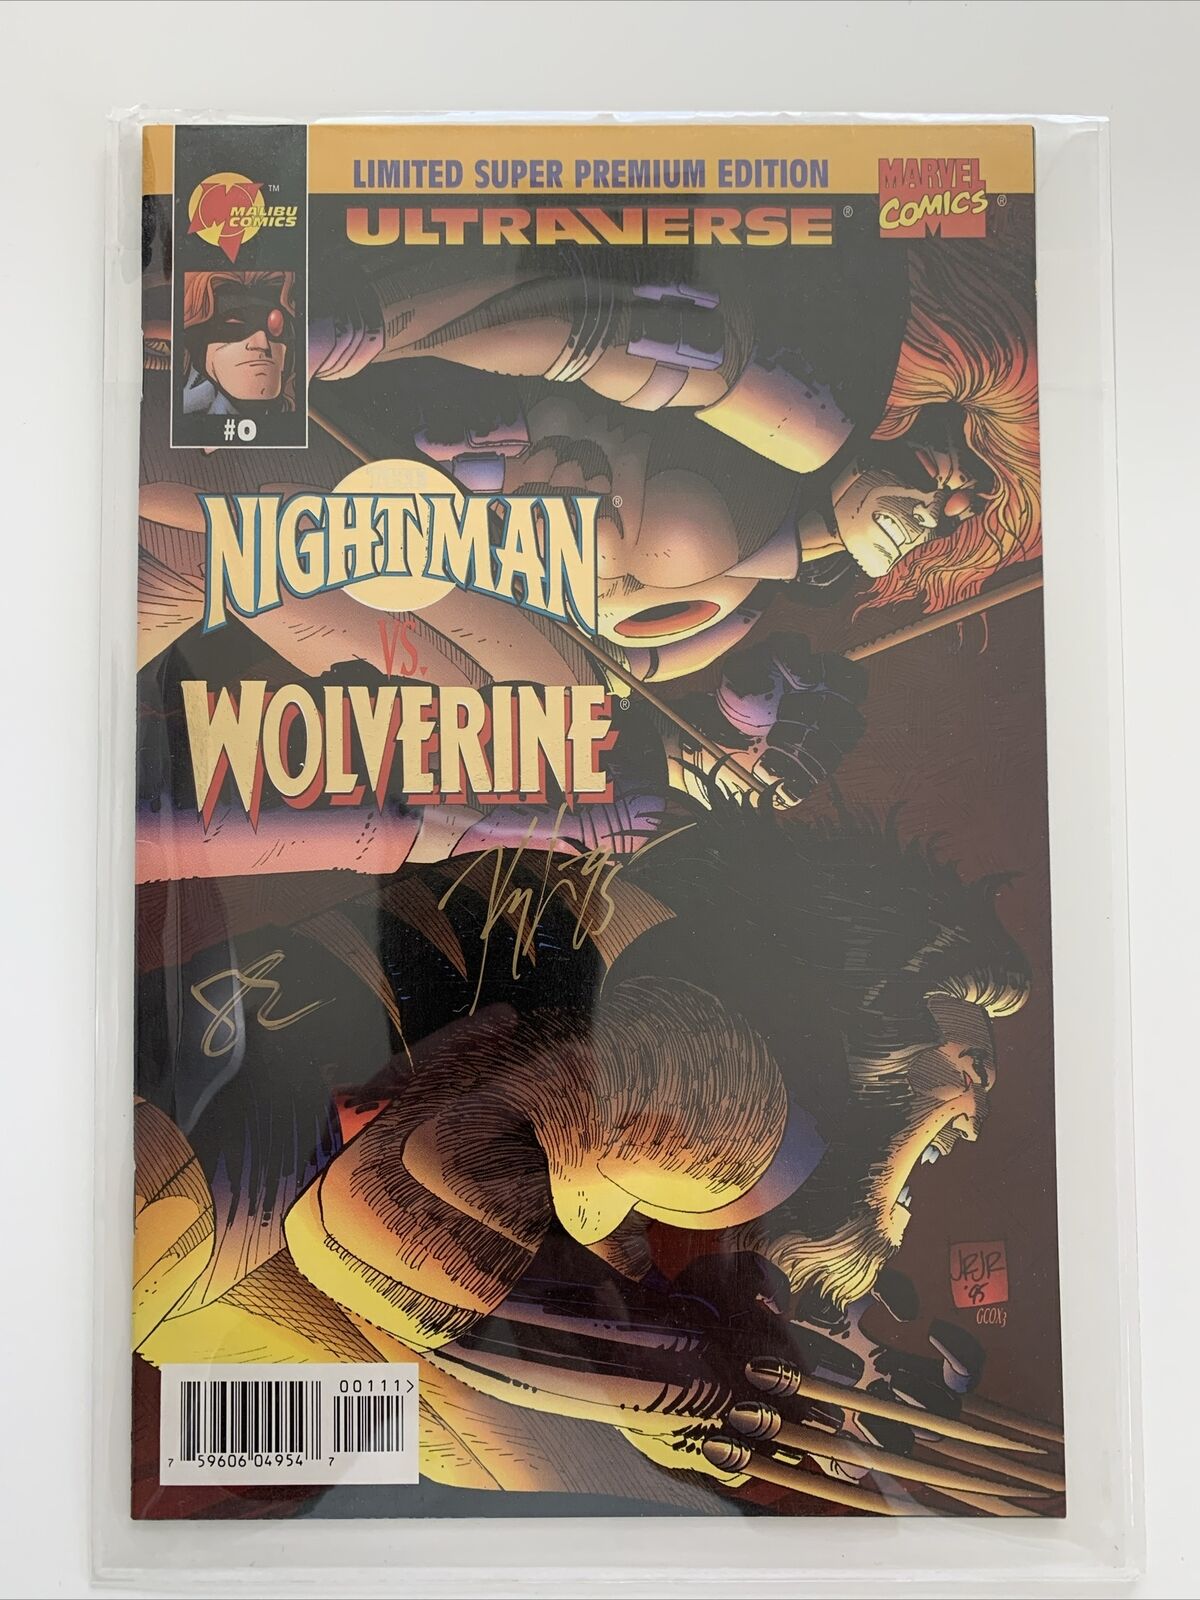 NIGHTMAN VS. WOLVERINE # 0 * MALIBU COMICS and MARVEL COMICS * 1995 Signed